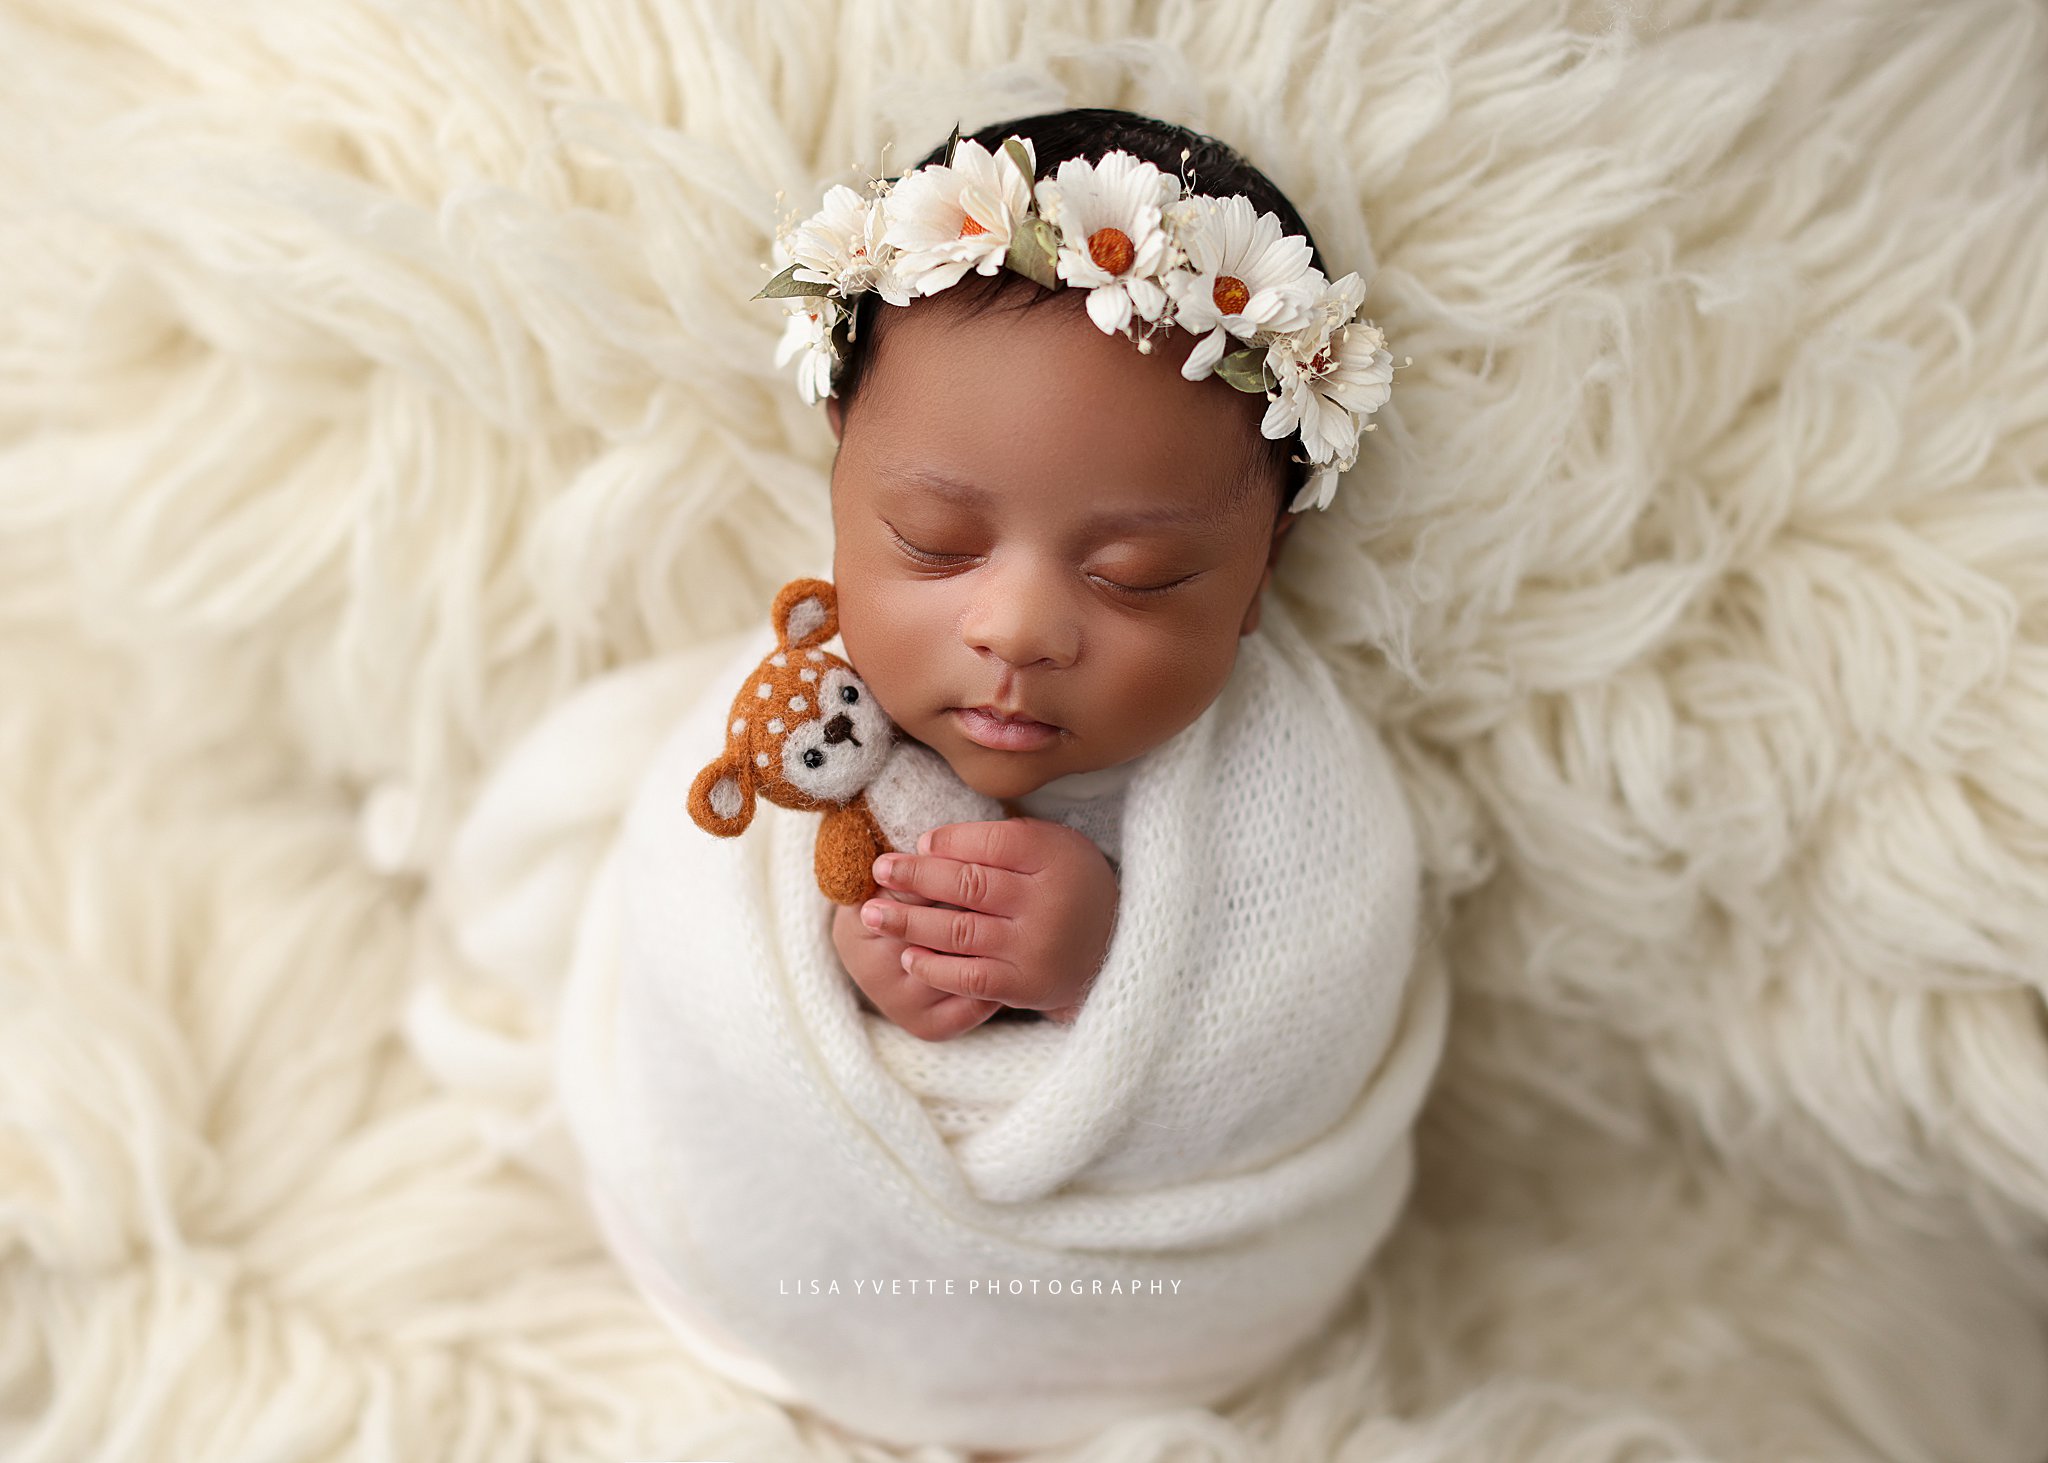 Swaddled African American Newborn with daisy headband and stuffed animal